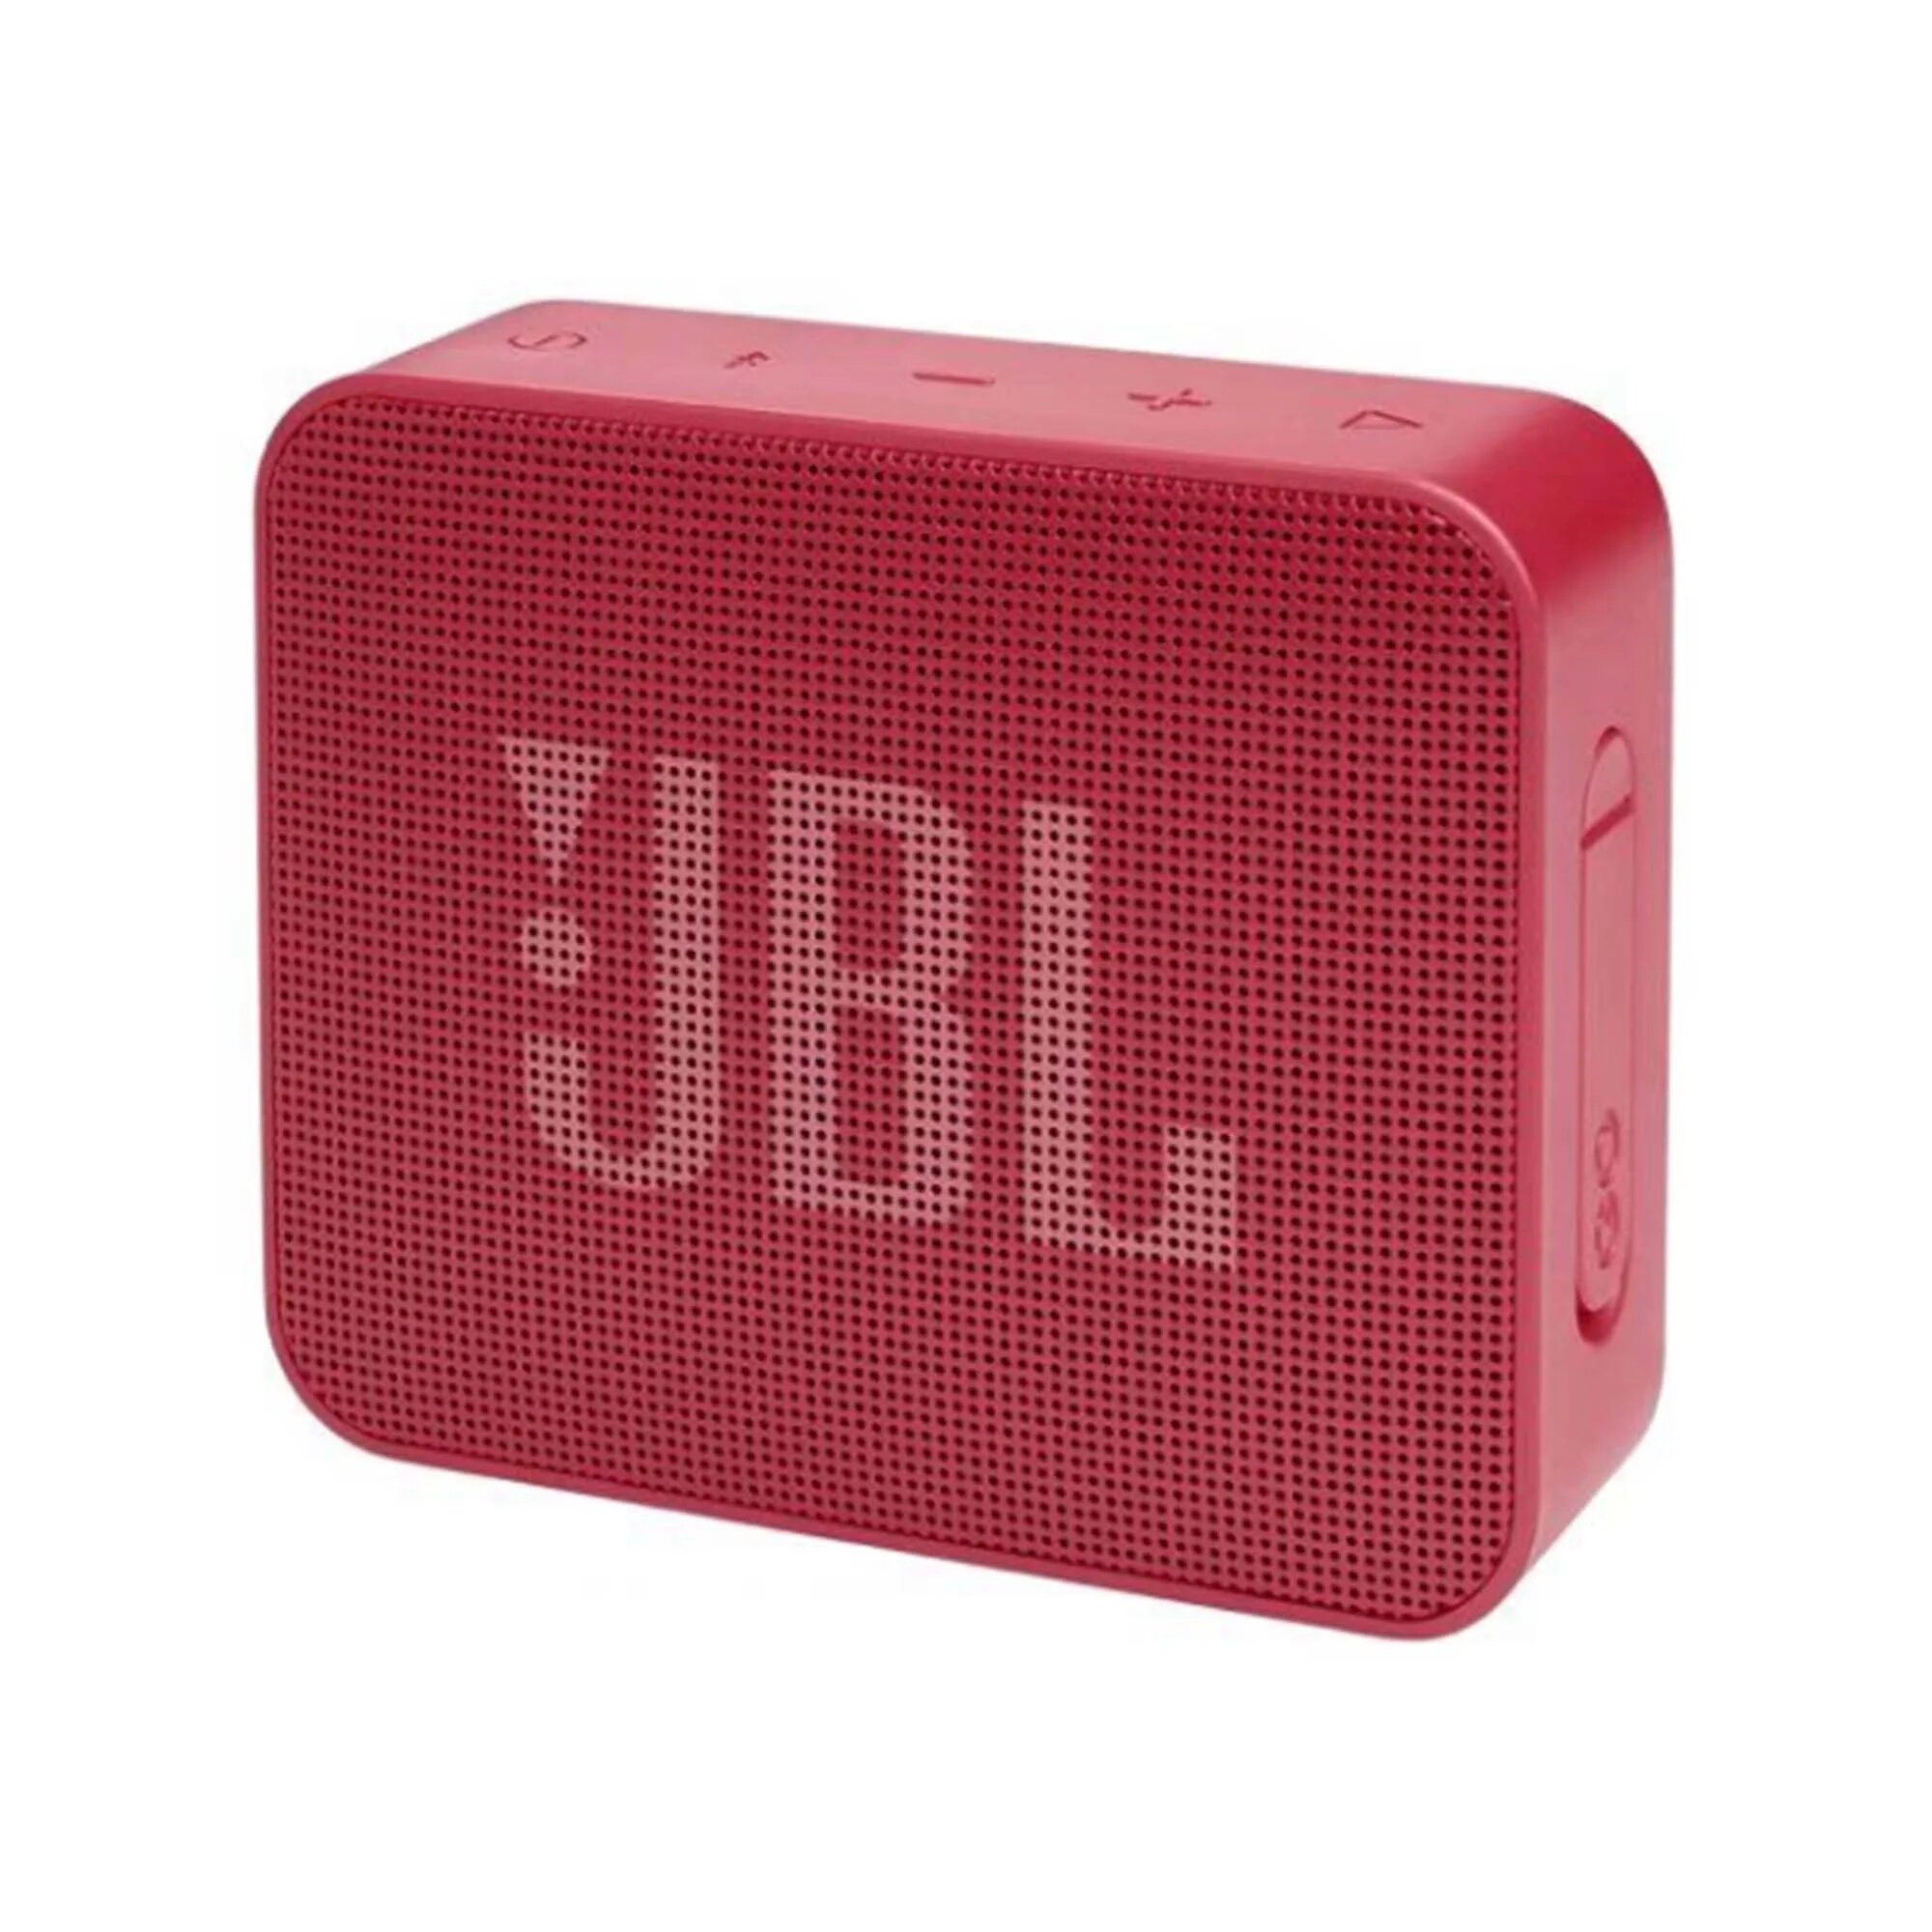 Портативная акустика JBL Go Essential Red портативная колонка jbl partybox on the go